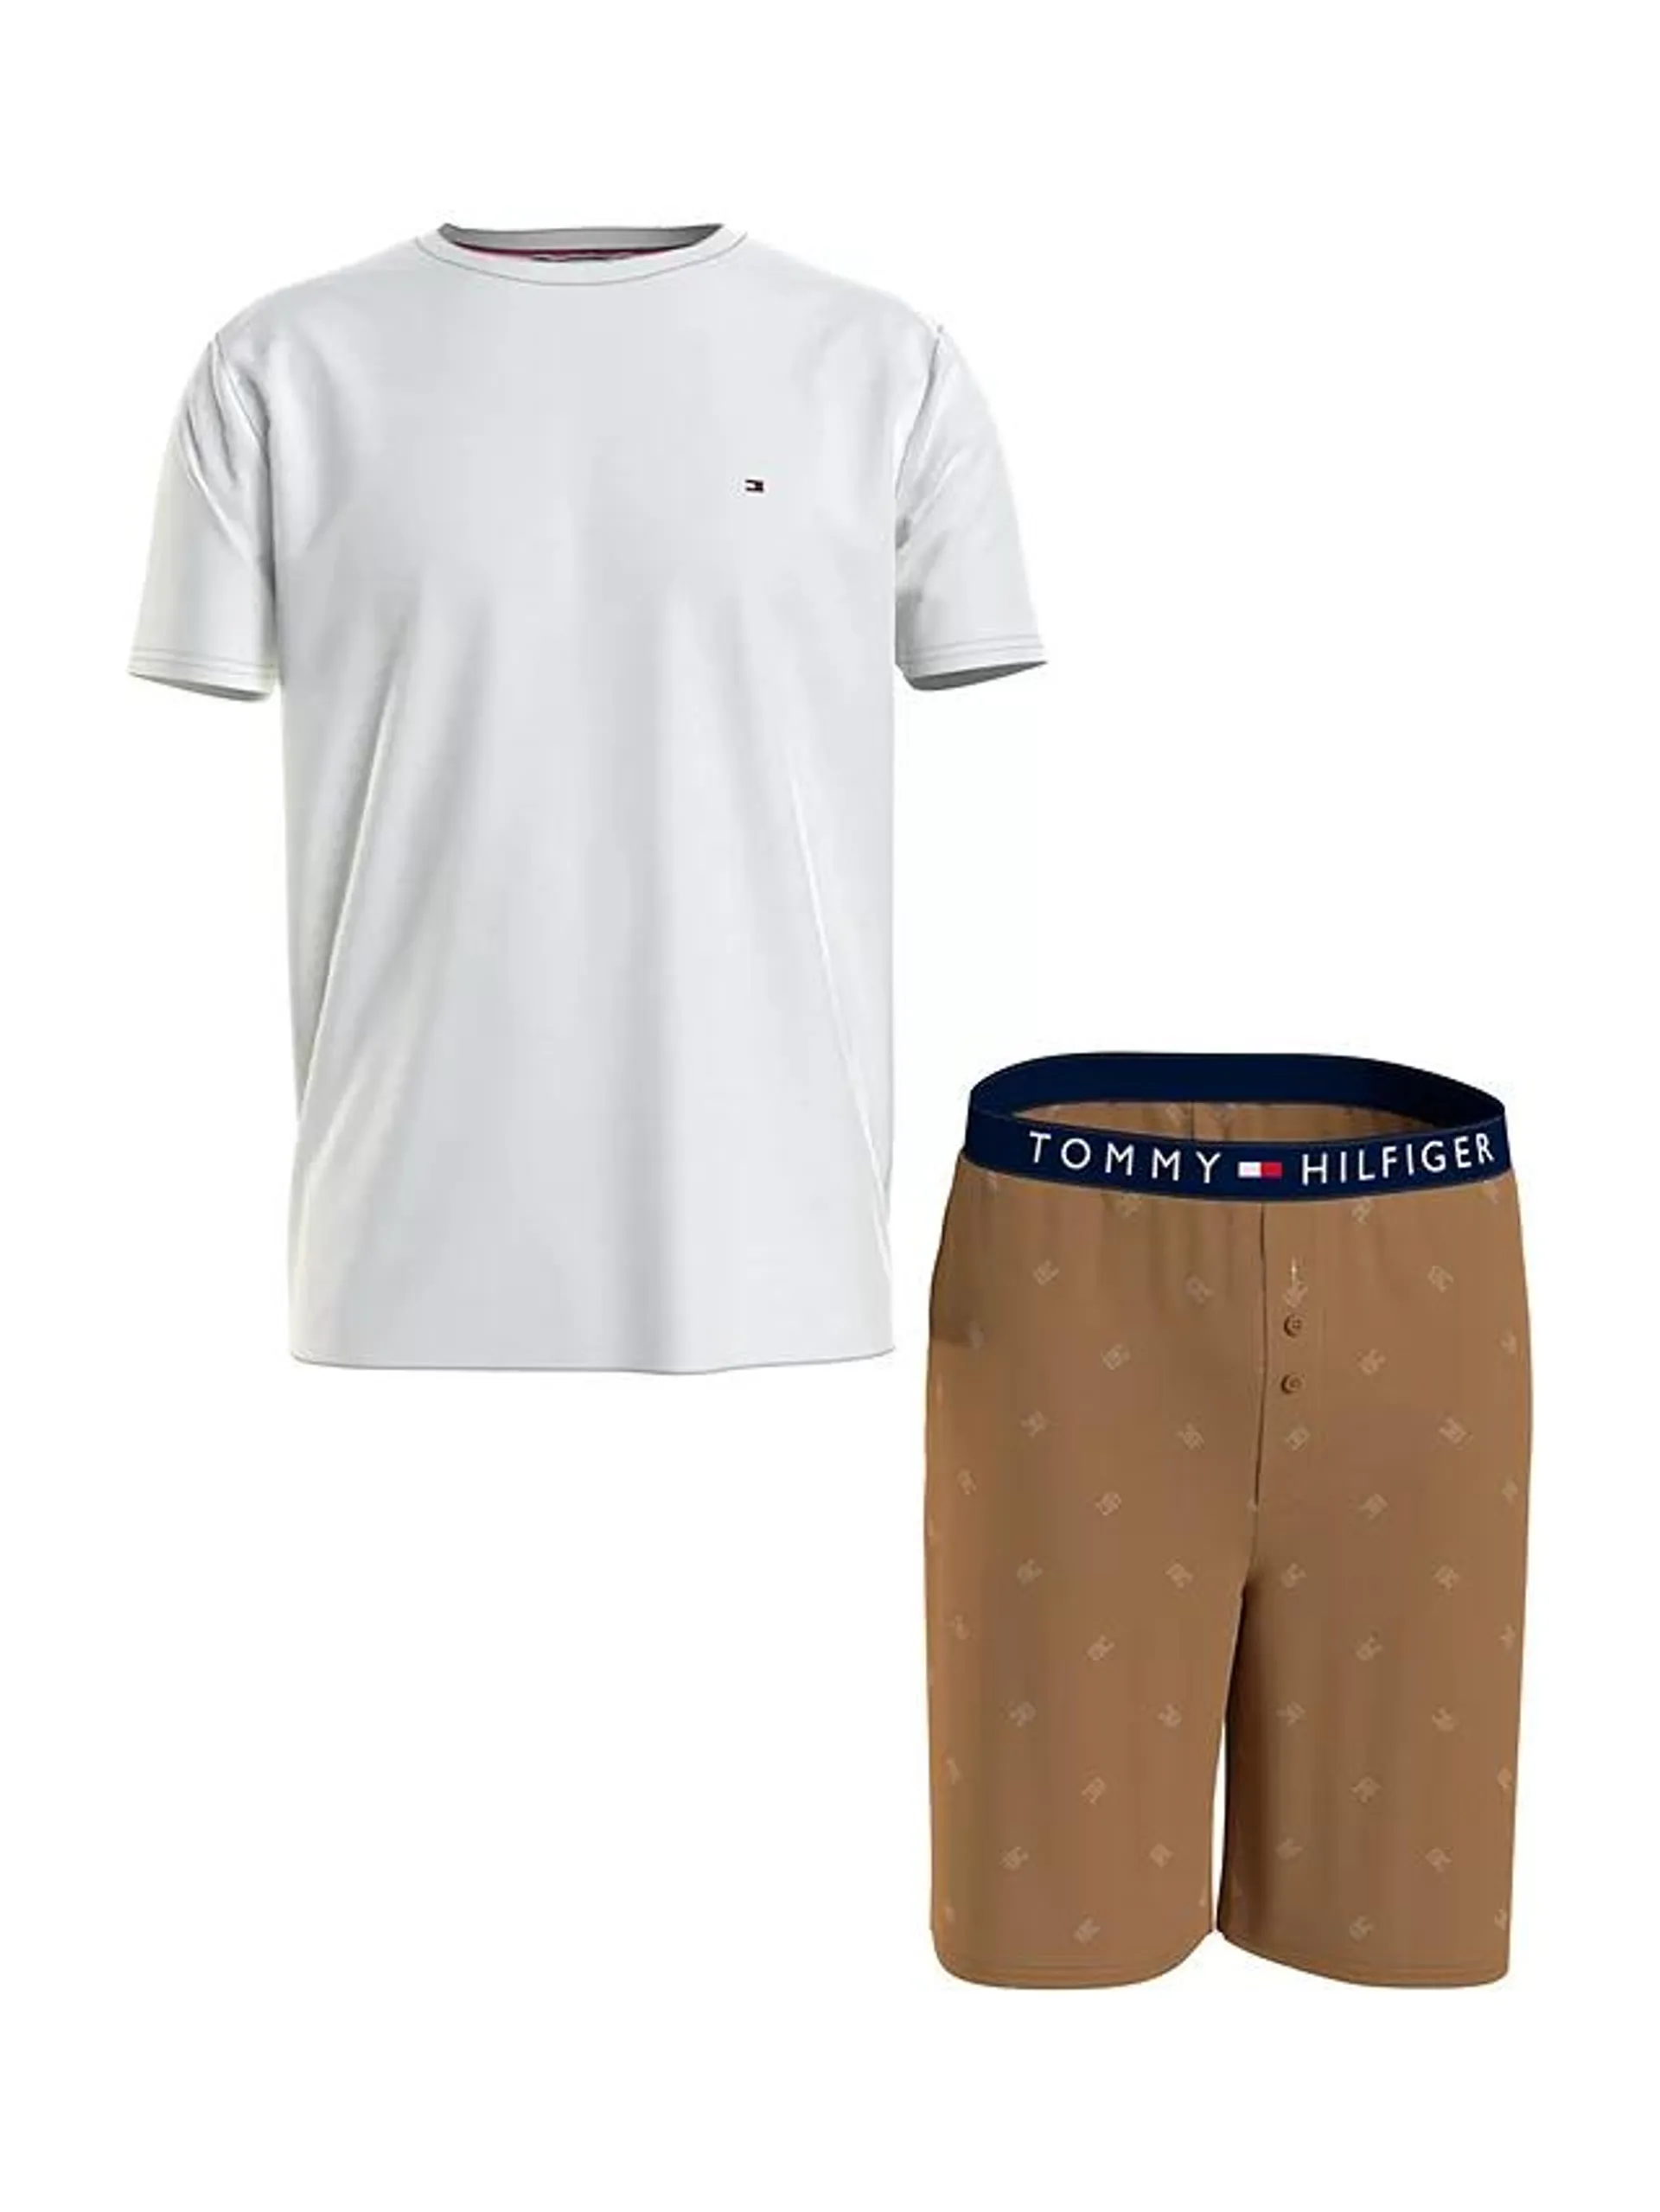 Tommy Hilfiger T-Shirt and Shorts Lounge Set, Ivory/Khaki